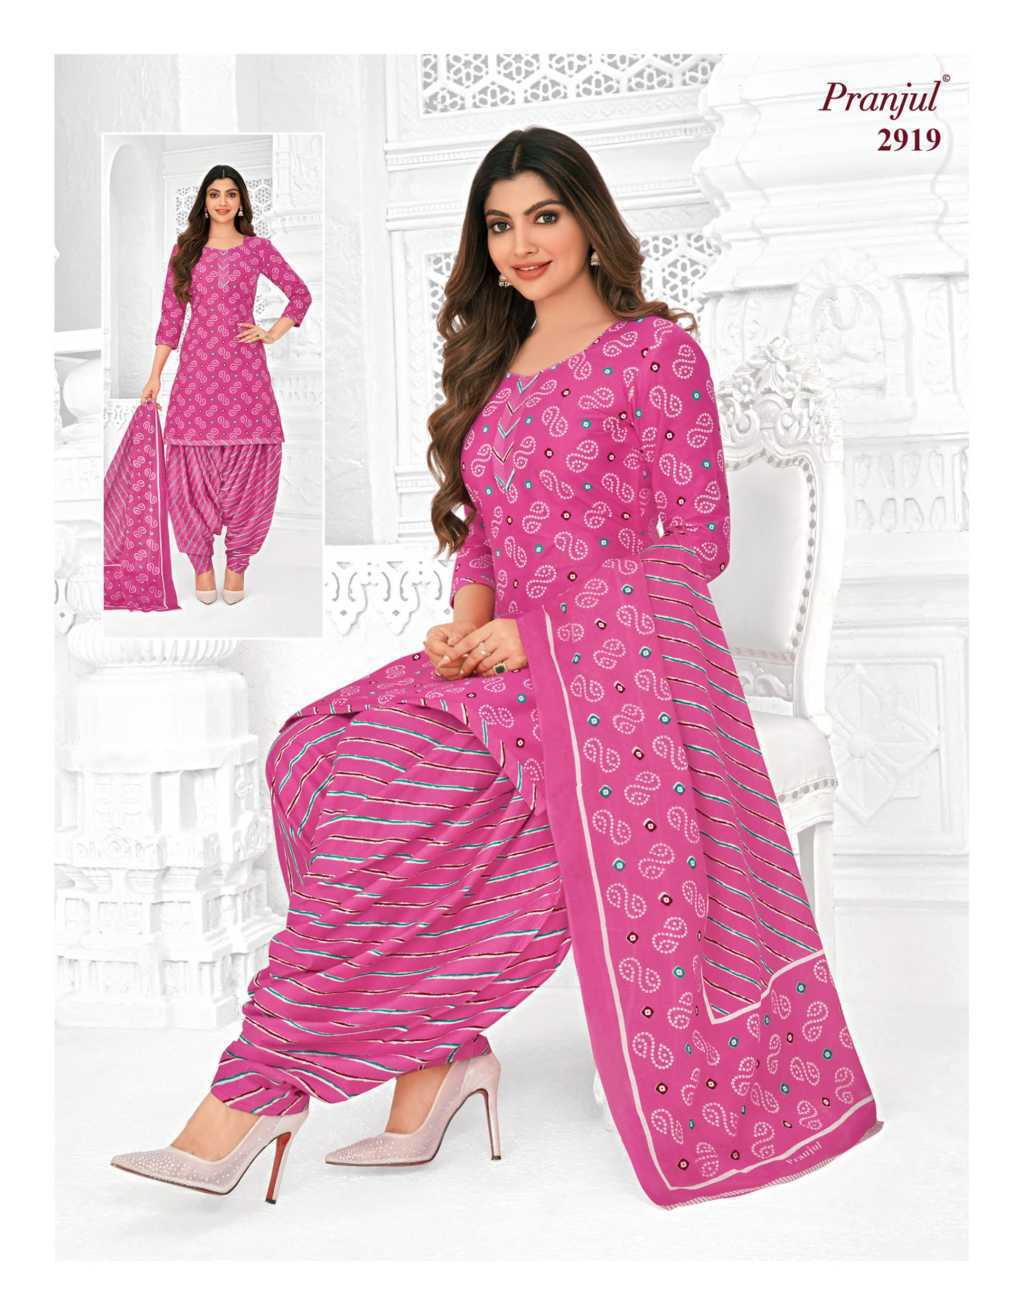 Buy New Designer Cotton Patiyala Dress at Rs. 7.33 online from Royal Export  Punjabi Dress Materials Wholesale : RE371